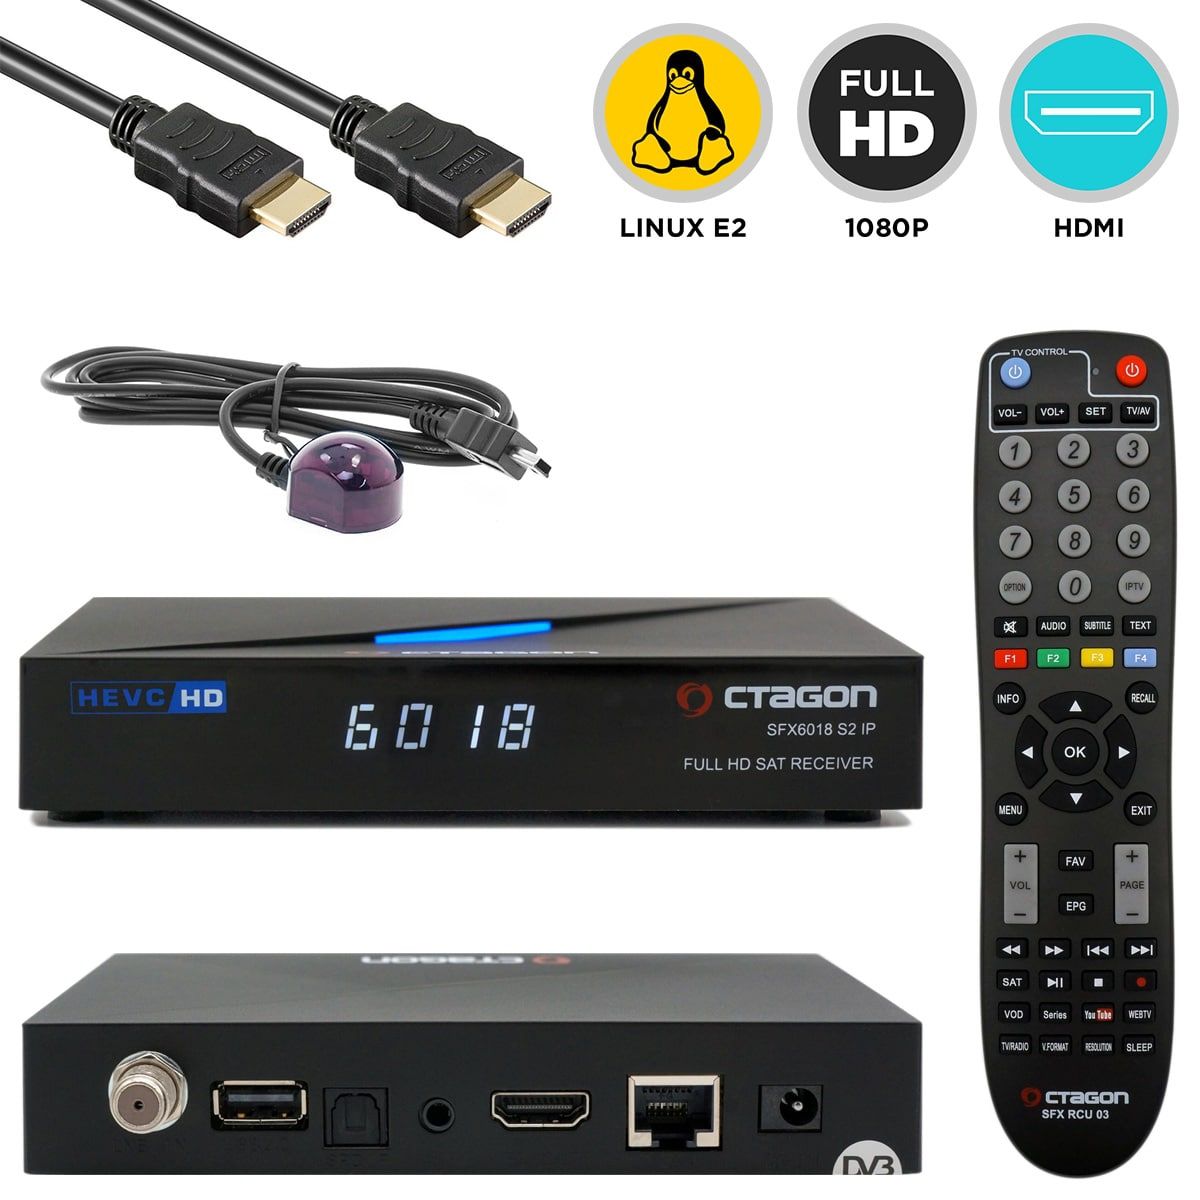 Octagon SFX6018 S2+IP Full HD Sat IP-Receiver (Linux E2 & Define OS, DVB-S2, 1080p, HDMI, USB, LAN) von Octagon